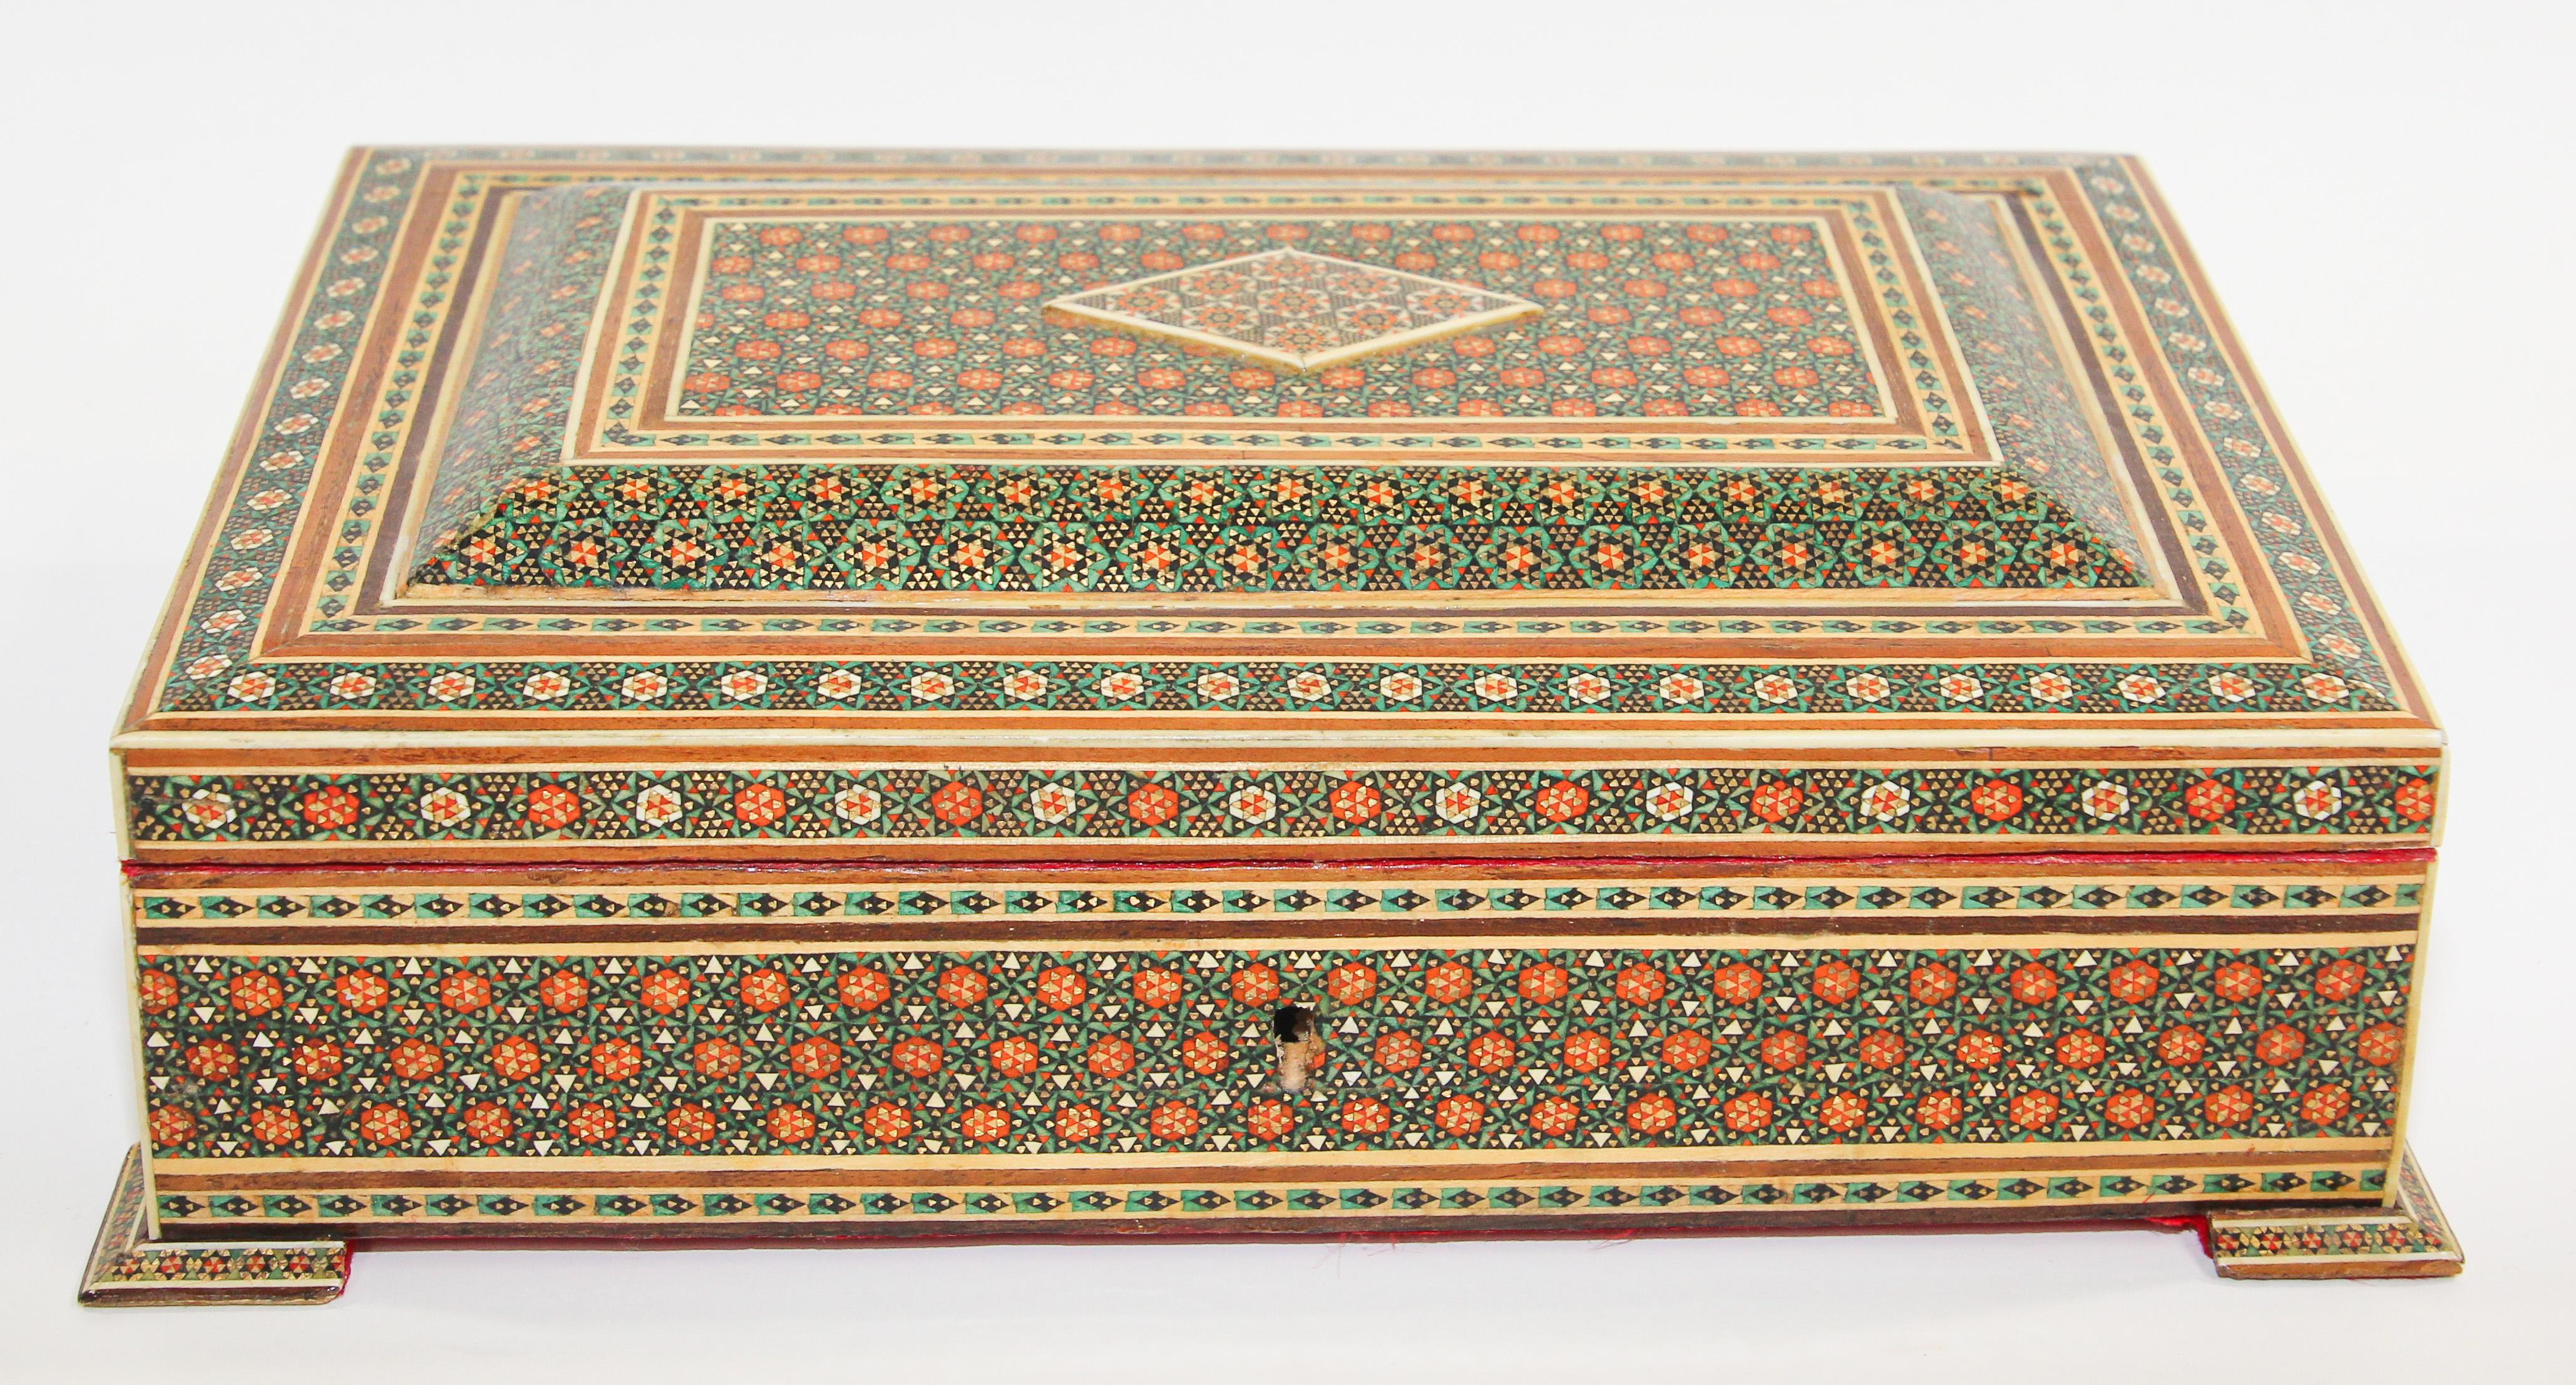 1940s Moorish Anglo-Indian Jewelry Mosaic Khatam Inlaid Box 12